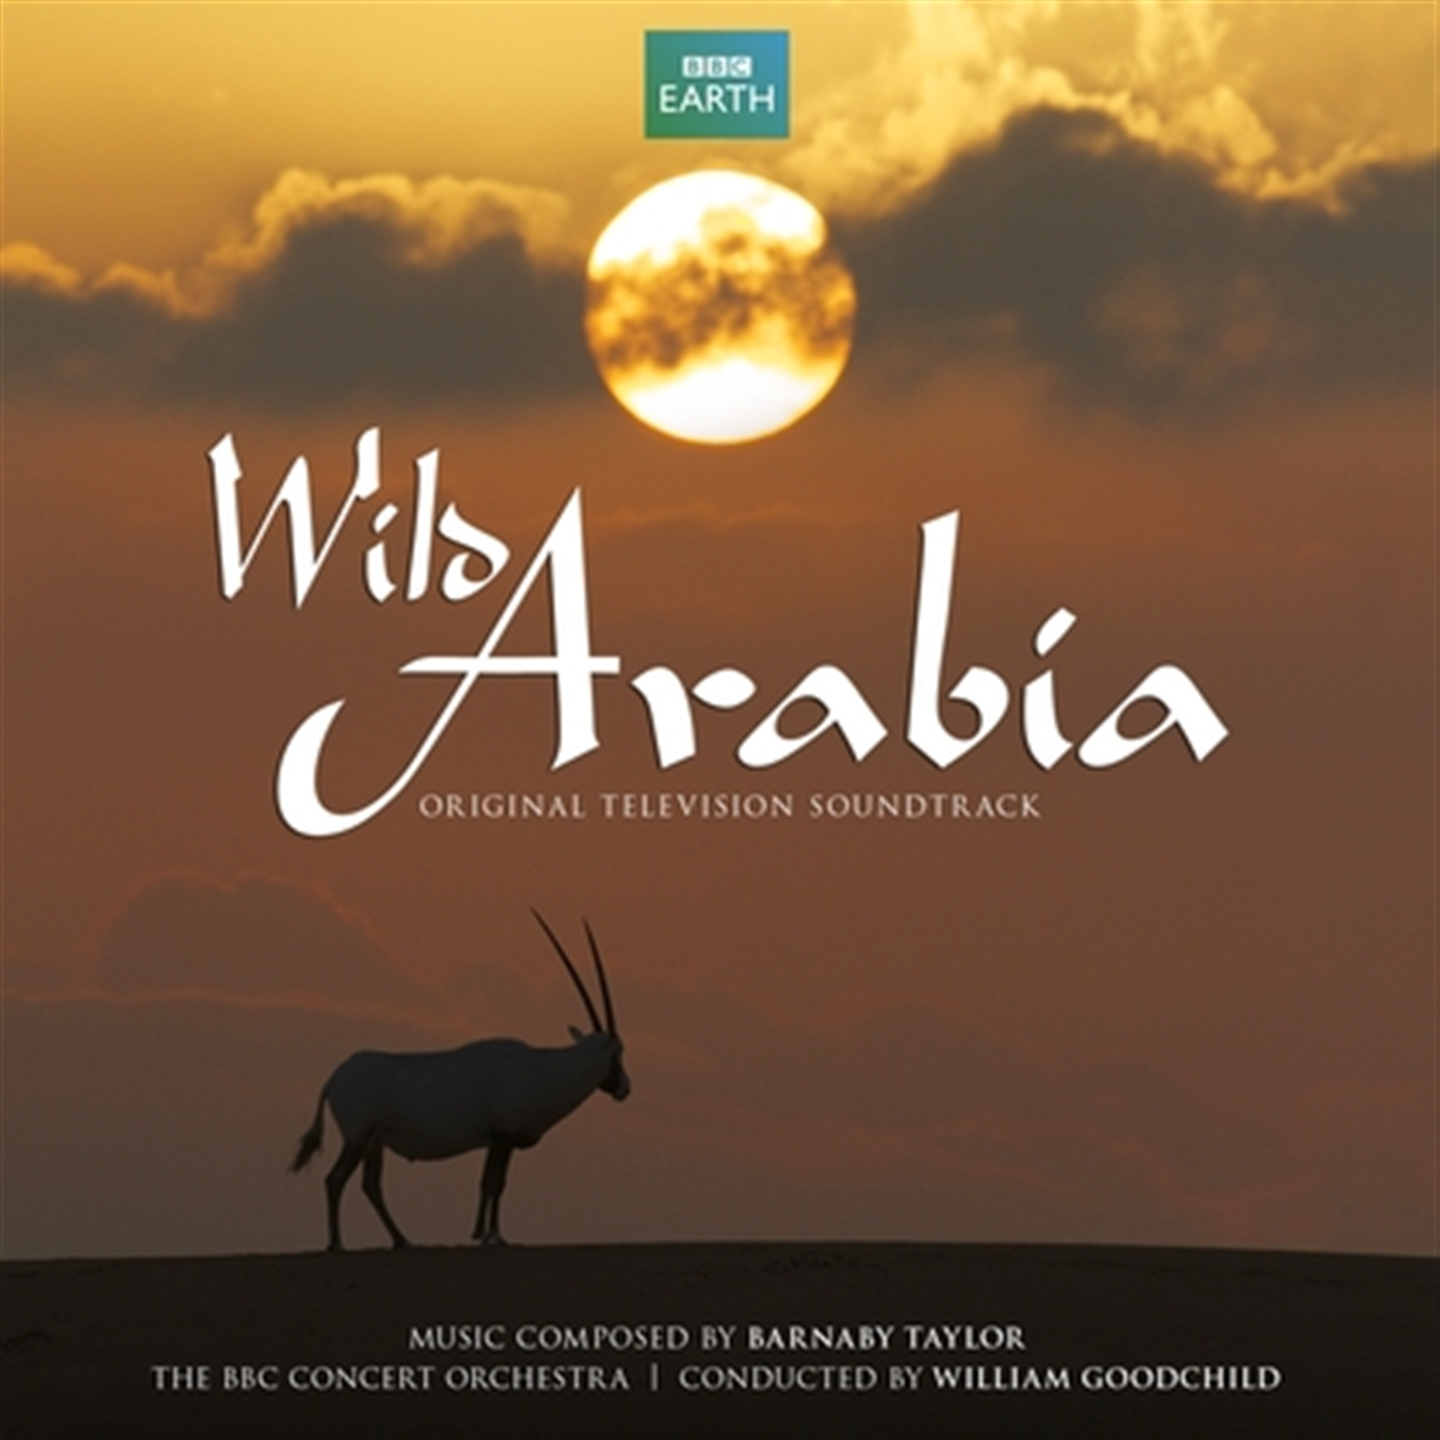 WILD ARABIA - ORIGINAL TV SOUNDTRACK